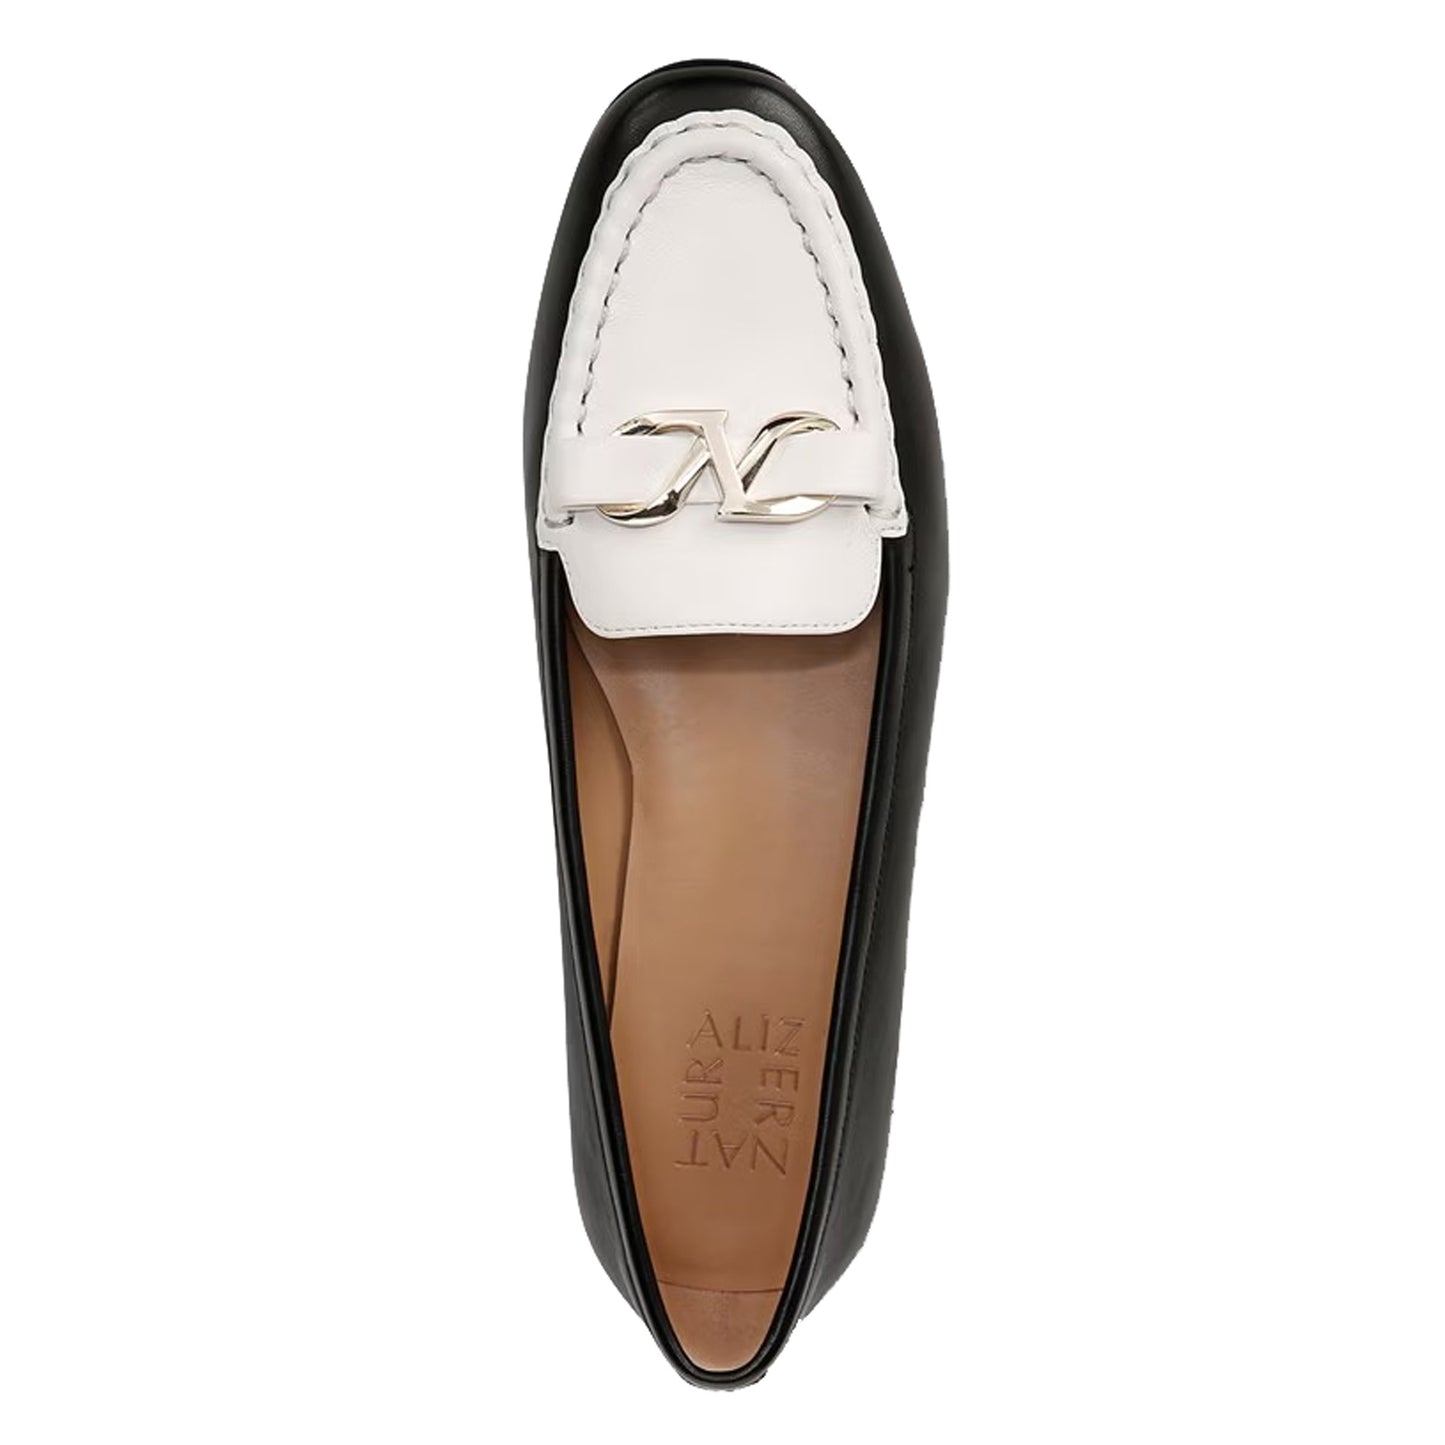 Peltz Shoes  Women's Naturalizer Layla Loafer Black White I9896L3001